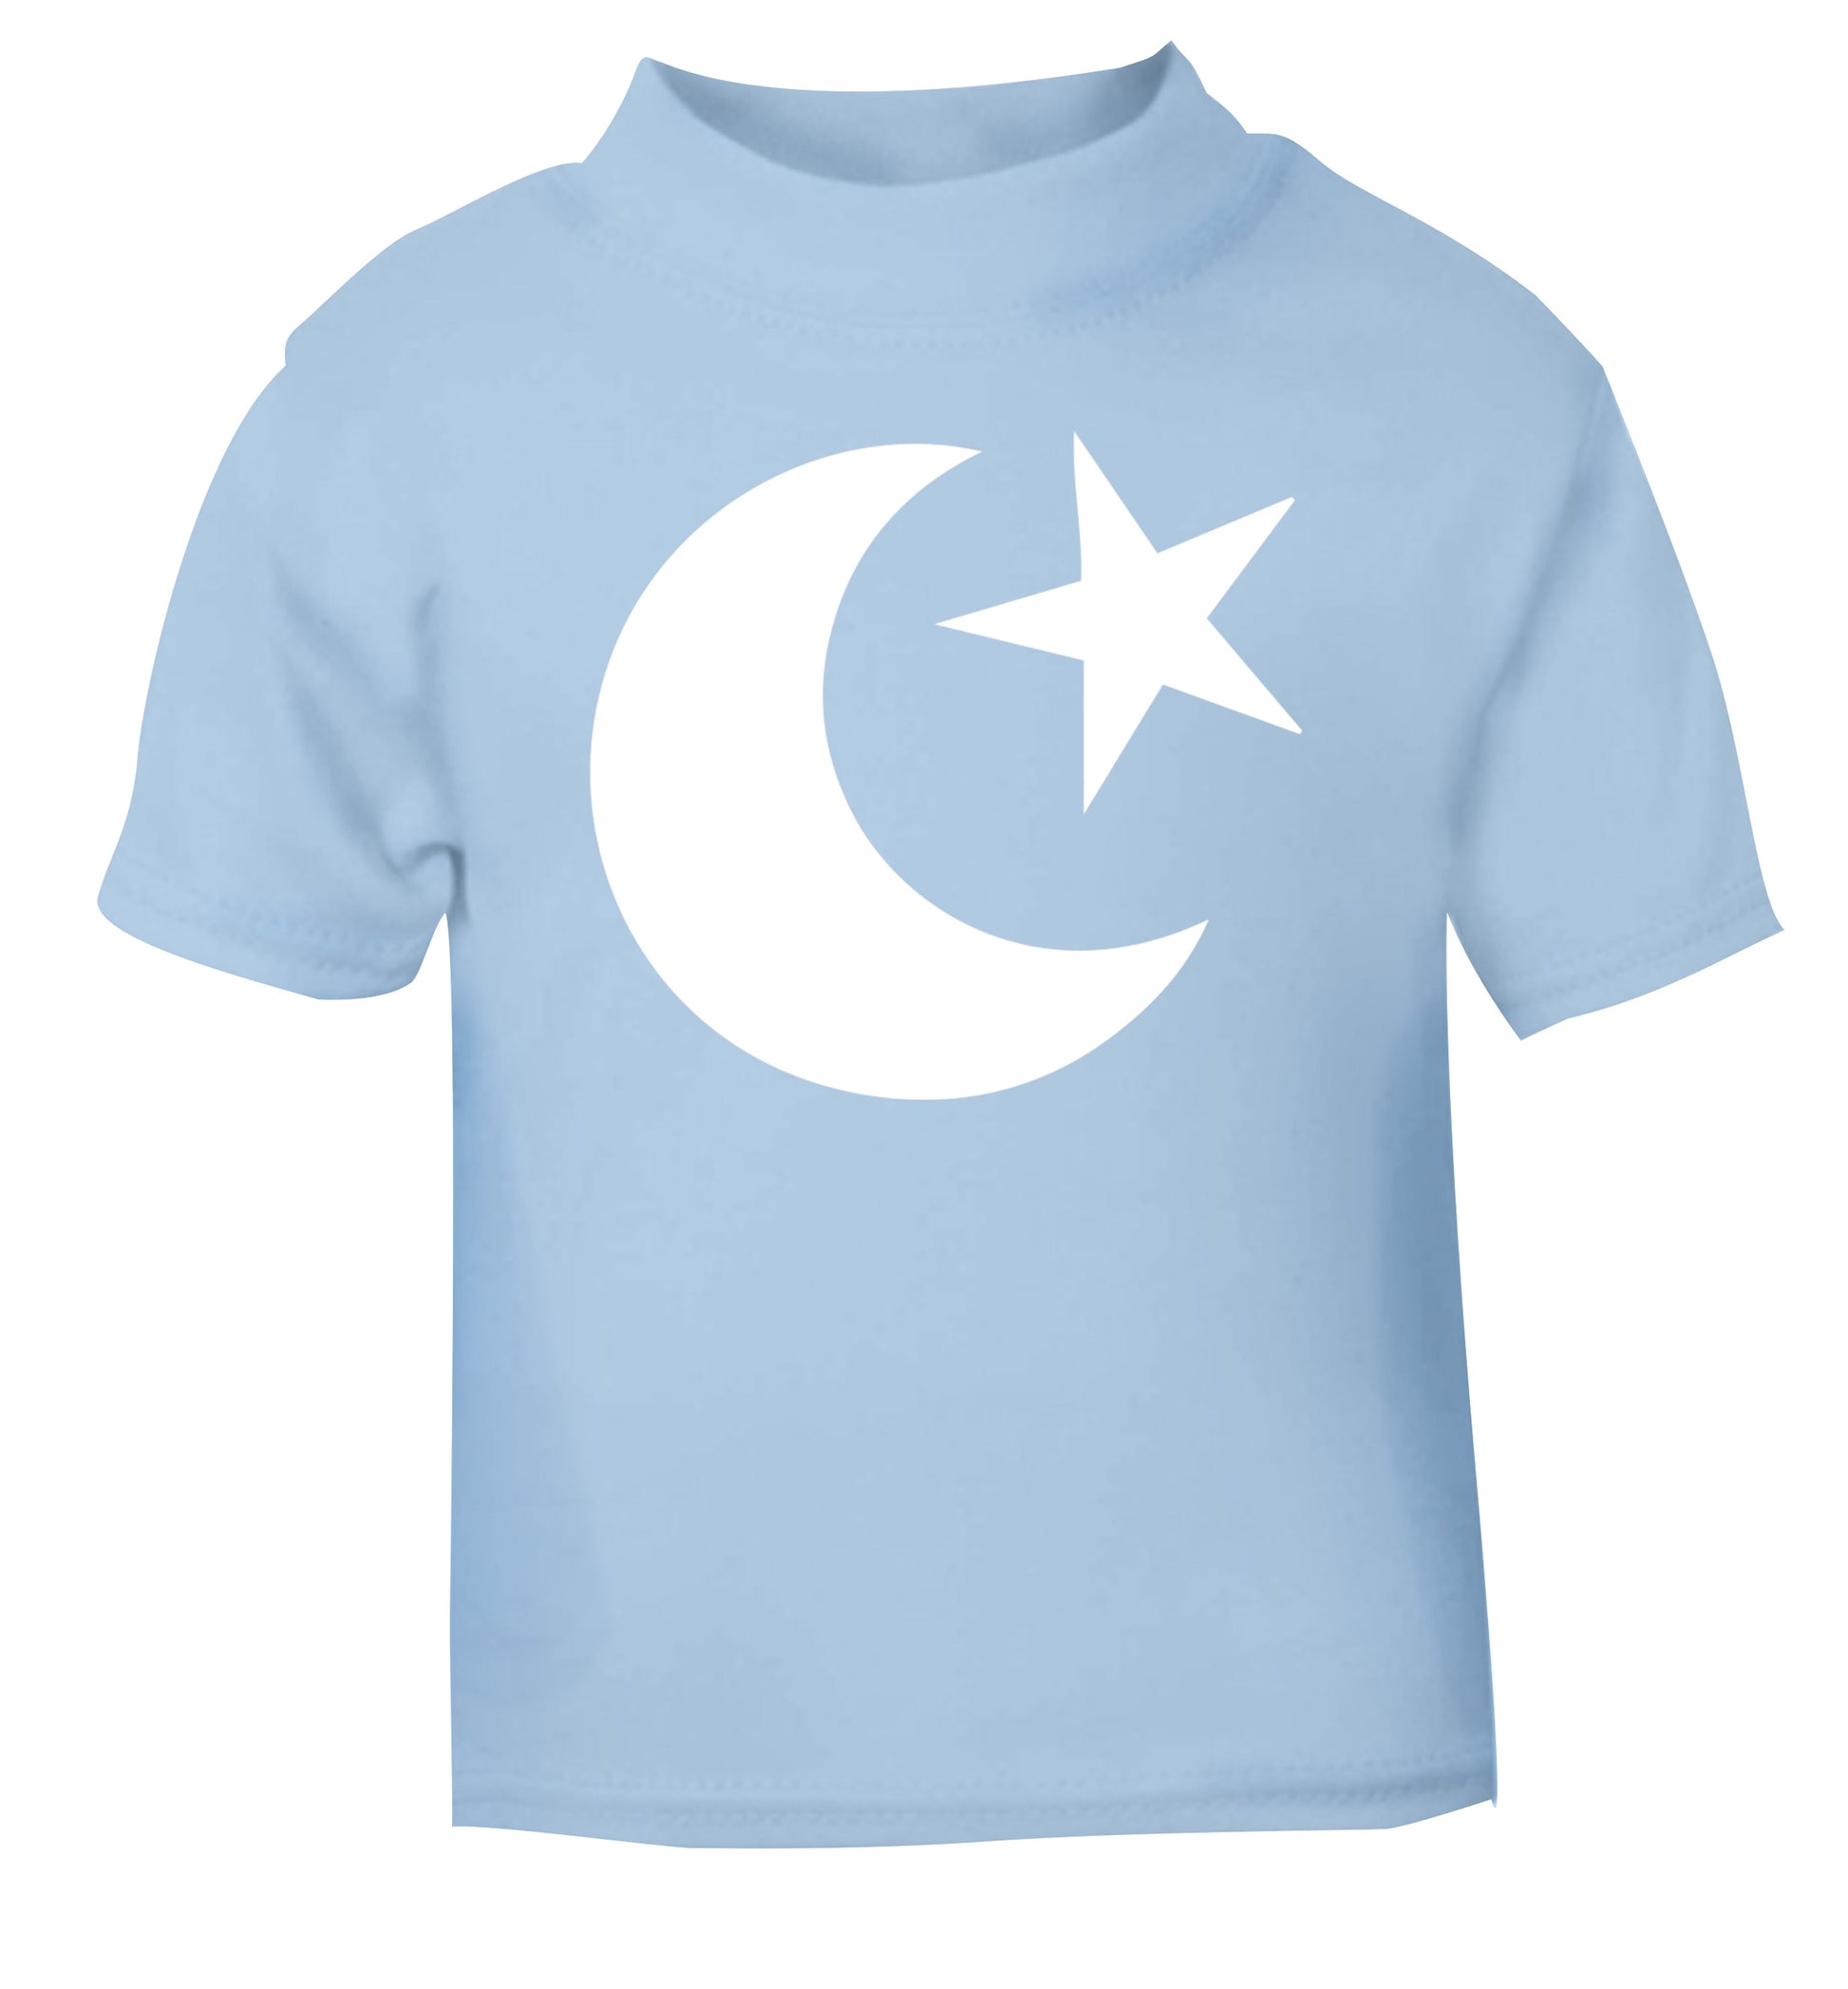 Eid symbol light blue baby toddler Tshirt 2 Years